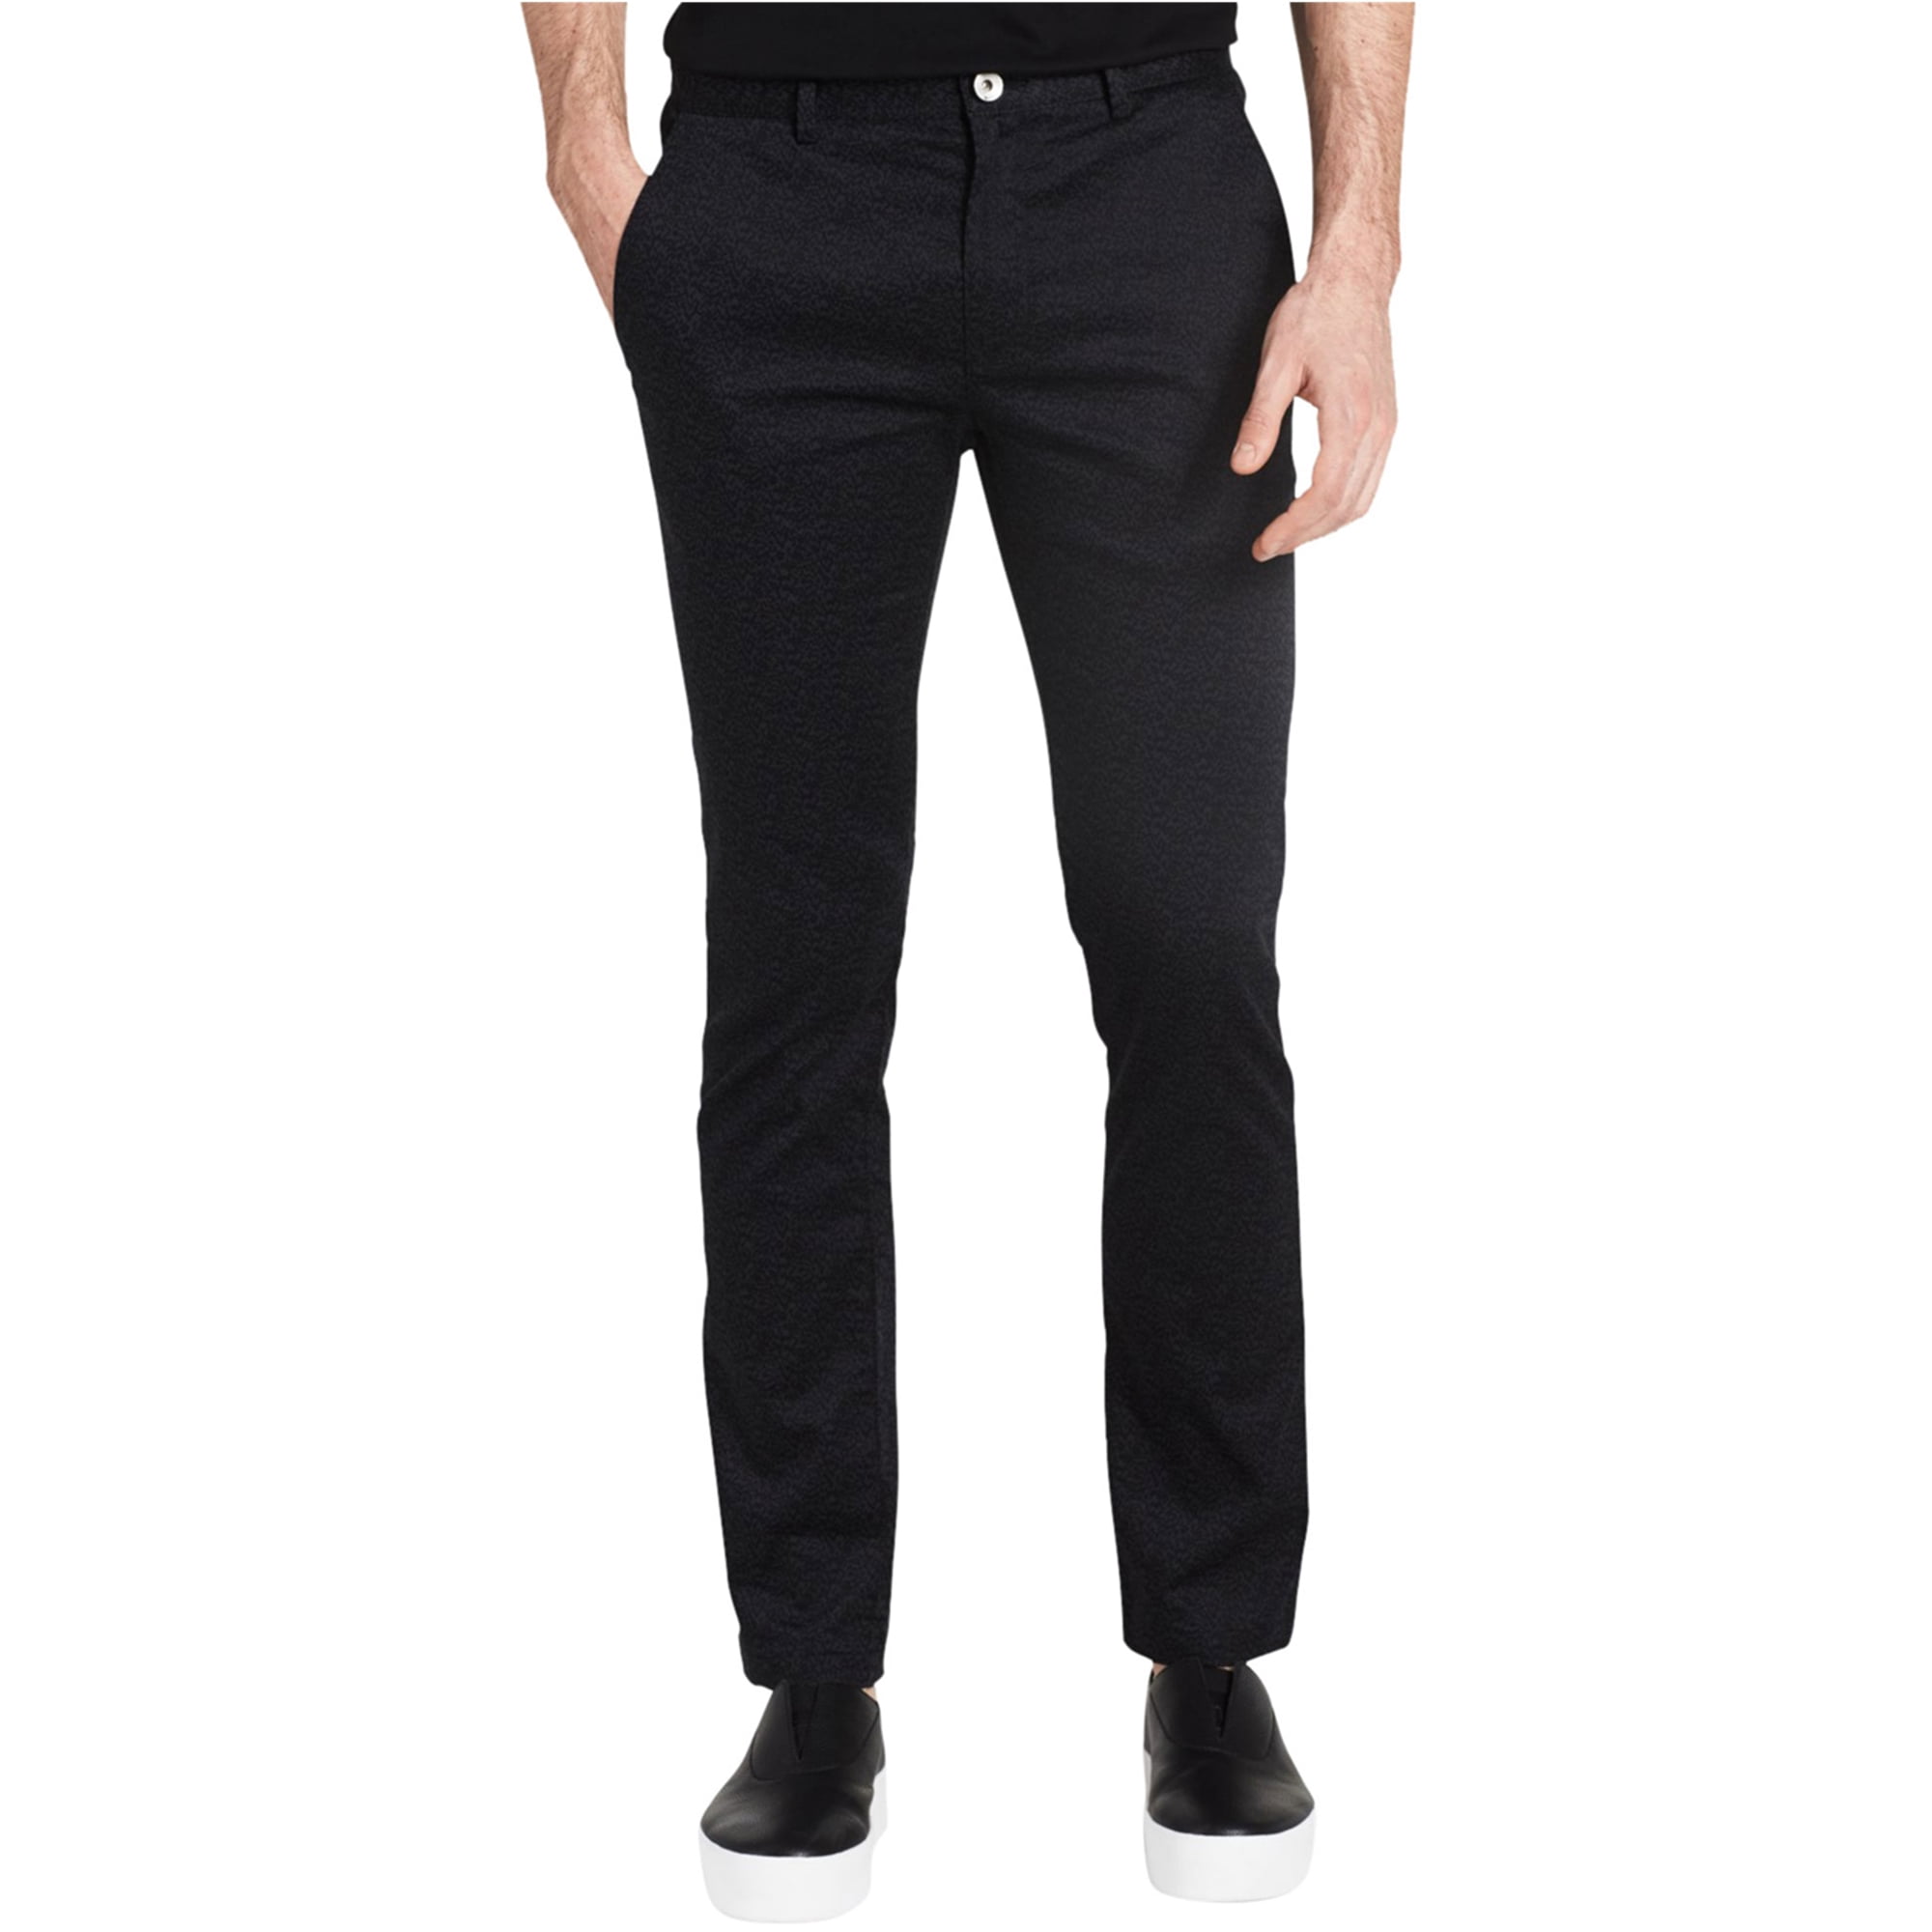 Buy Navy Solid Slim Fit Trousers for Men Online at Killer Jeans  490800